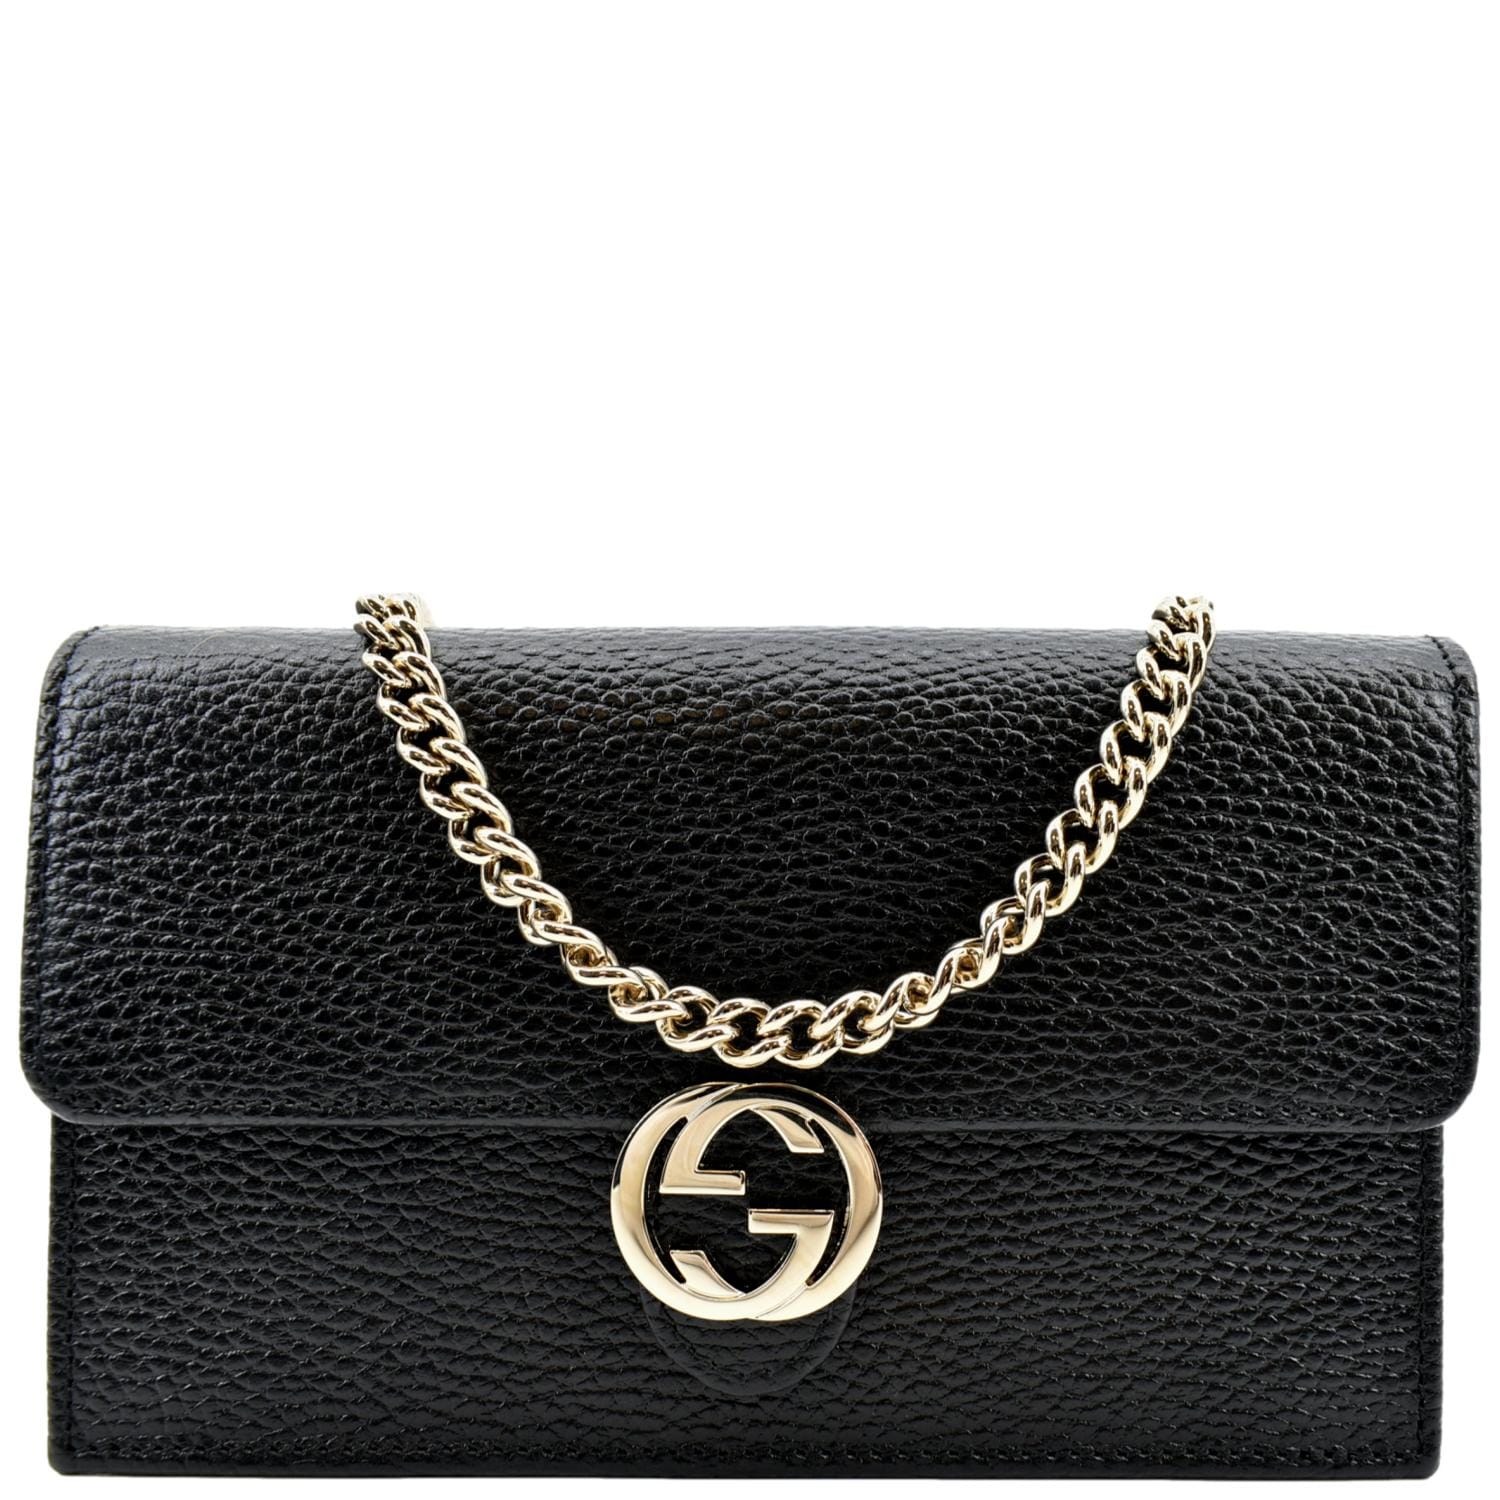 GUCCI GG Interlocking Pebbled Leather Crossbody Bag Black 615523